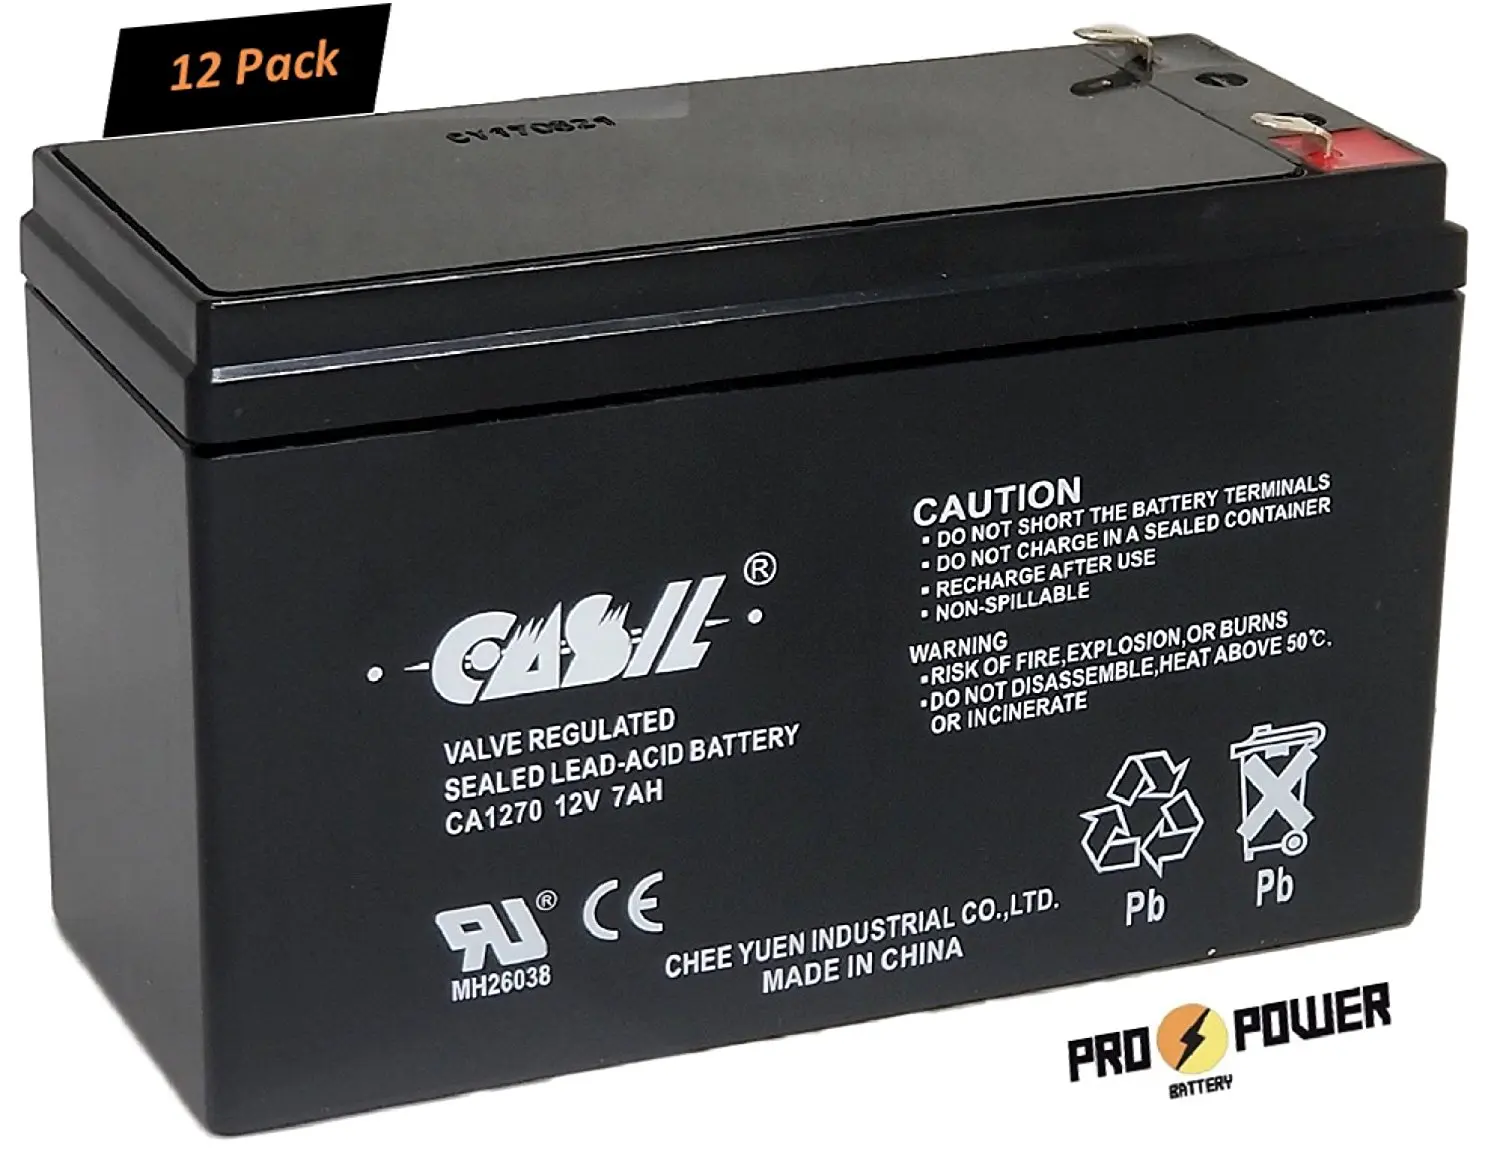 Battery 12v 7ah. Powerman Valve regulated Sealed lead-acid Battery ca1270 12v 7ah. 12v 7ah Sealed Battery. Powerman Valve regulated Sealed lead-acid Battery ca1270 12v 7ah p. Casil 12v 27 Ah.